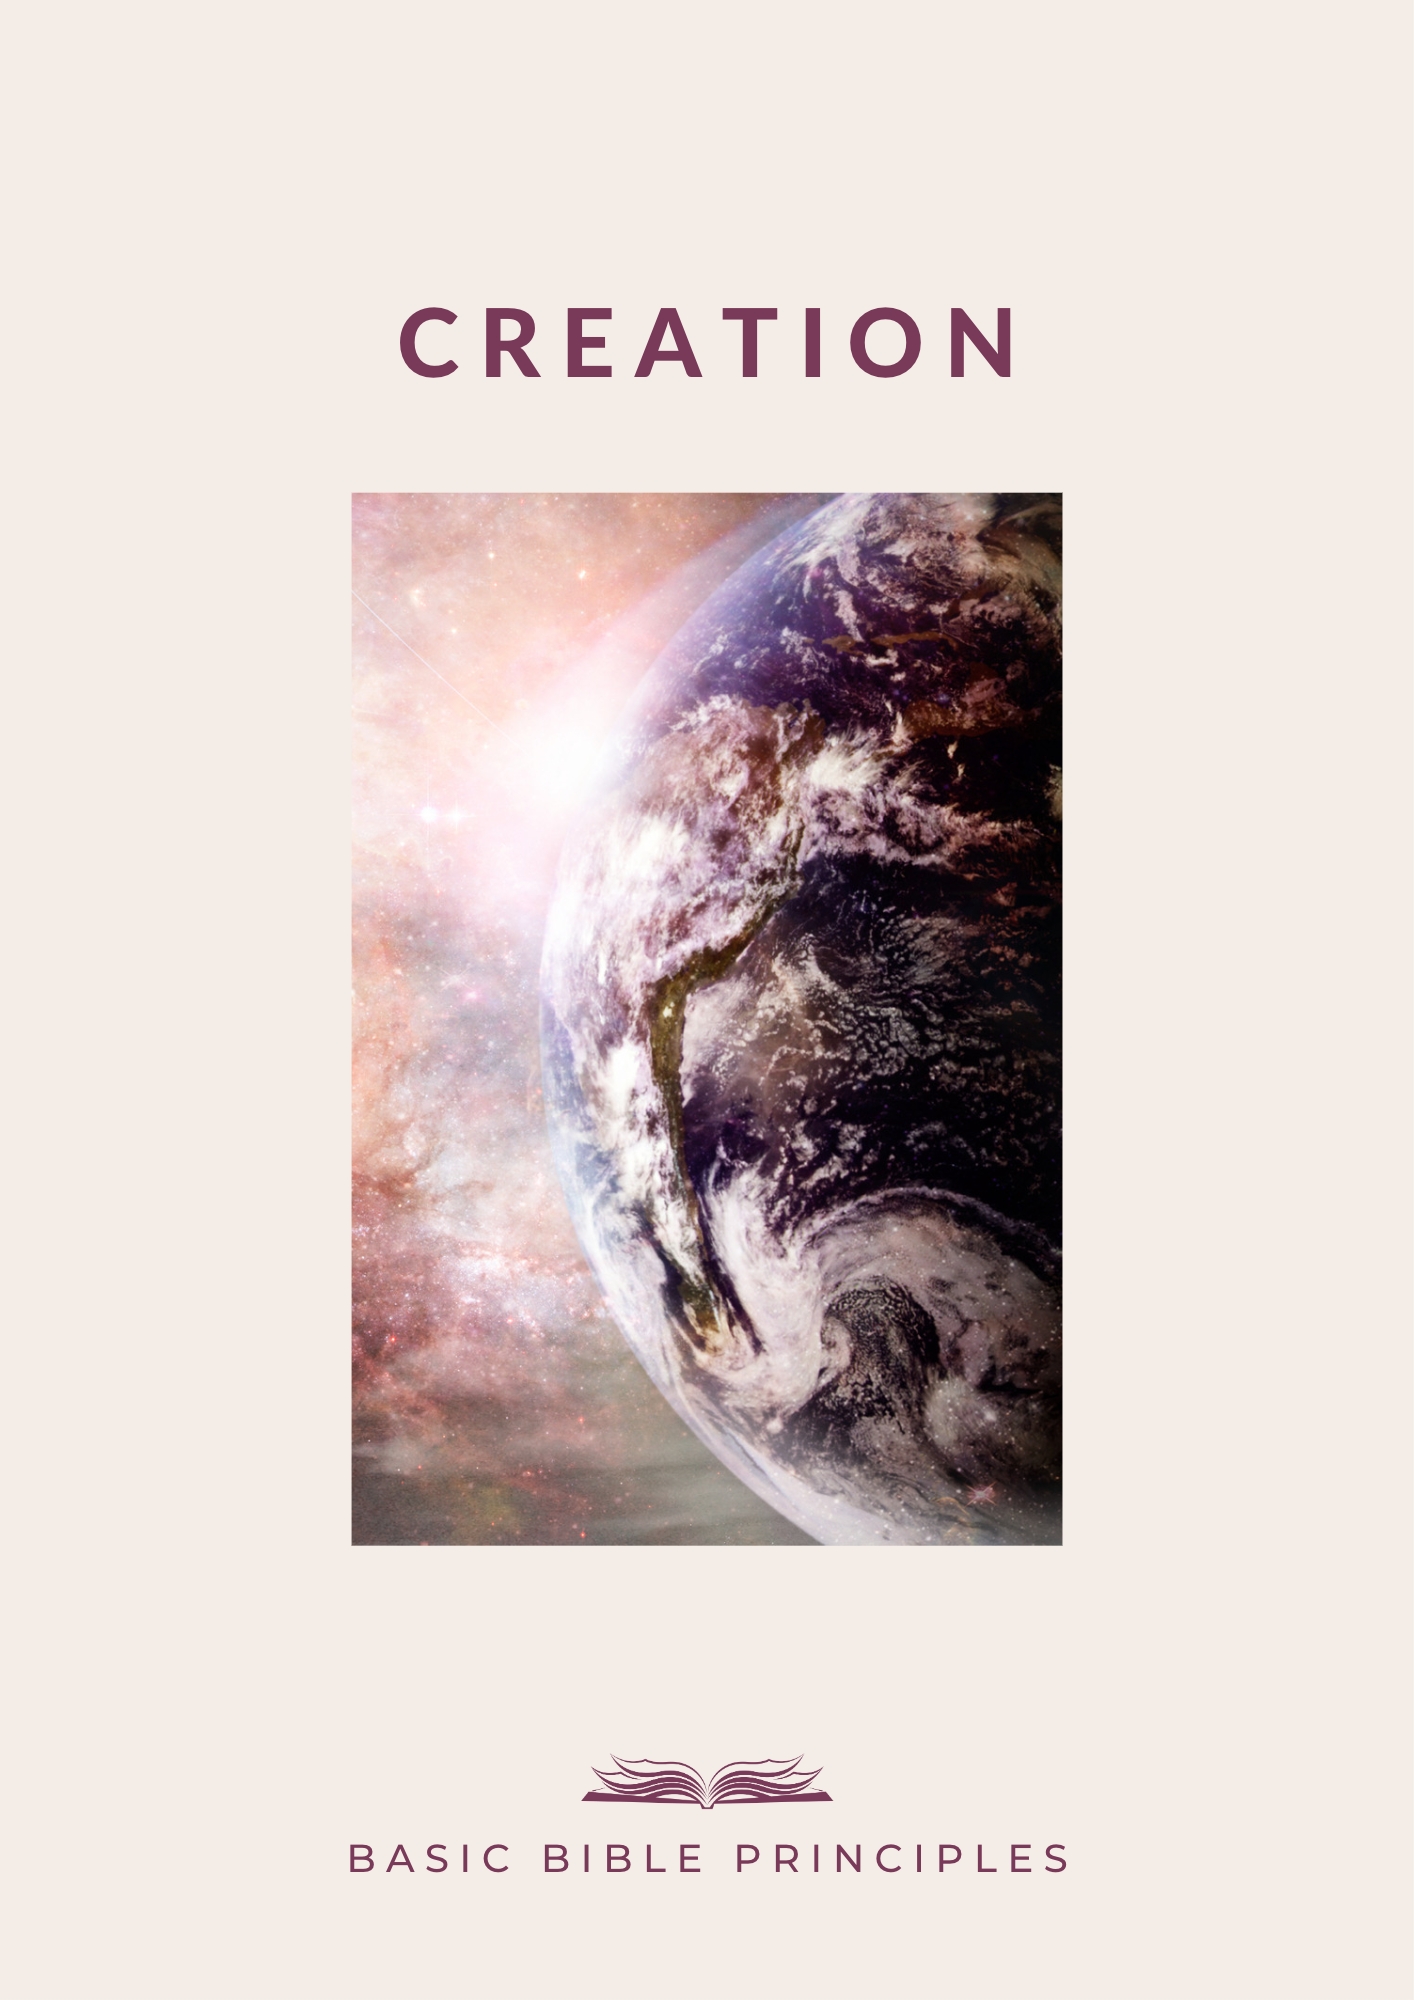 Basic Bible Principles: CREATION